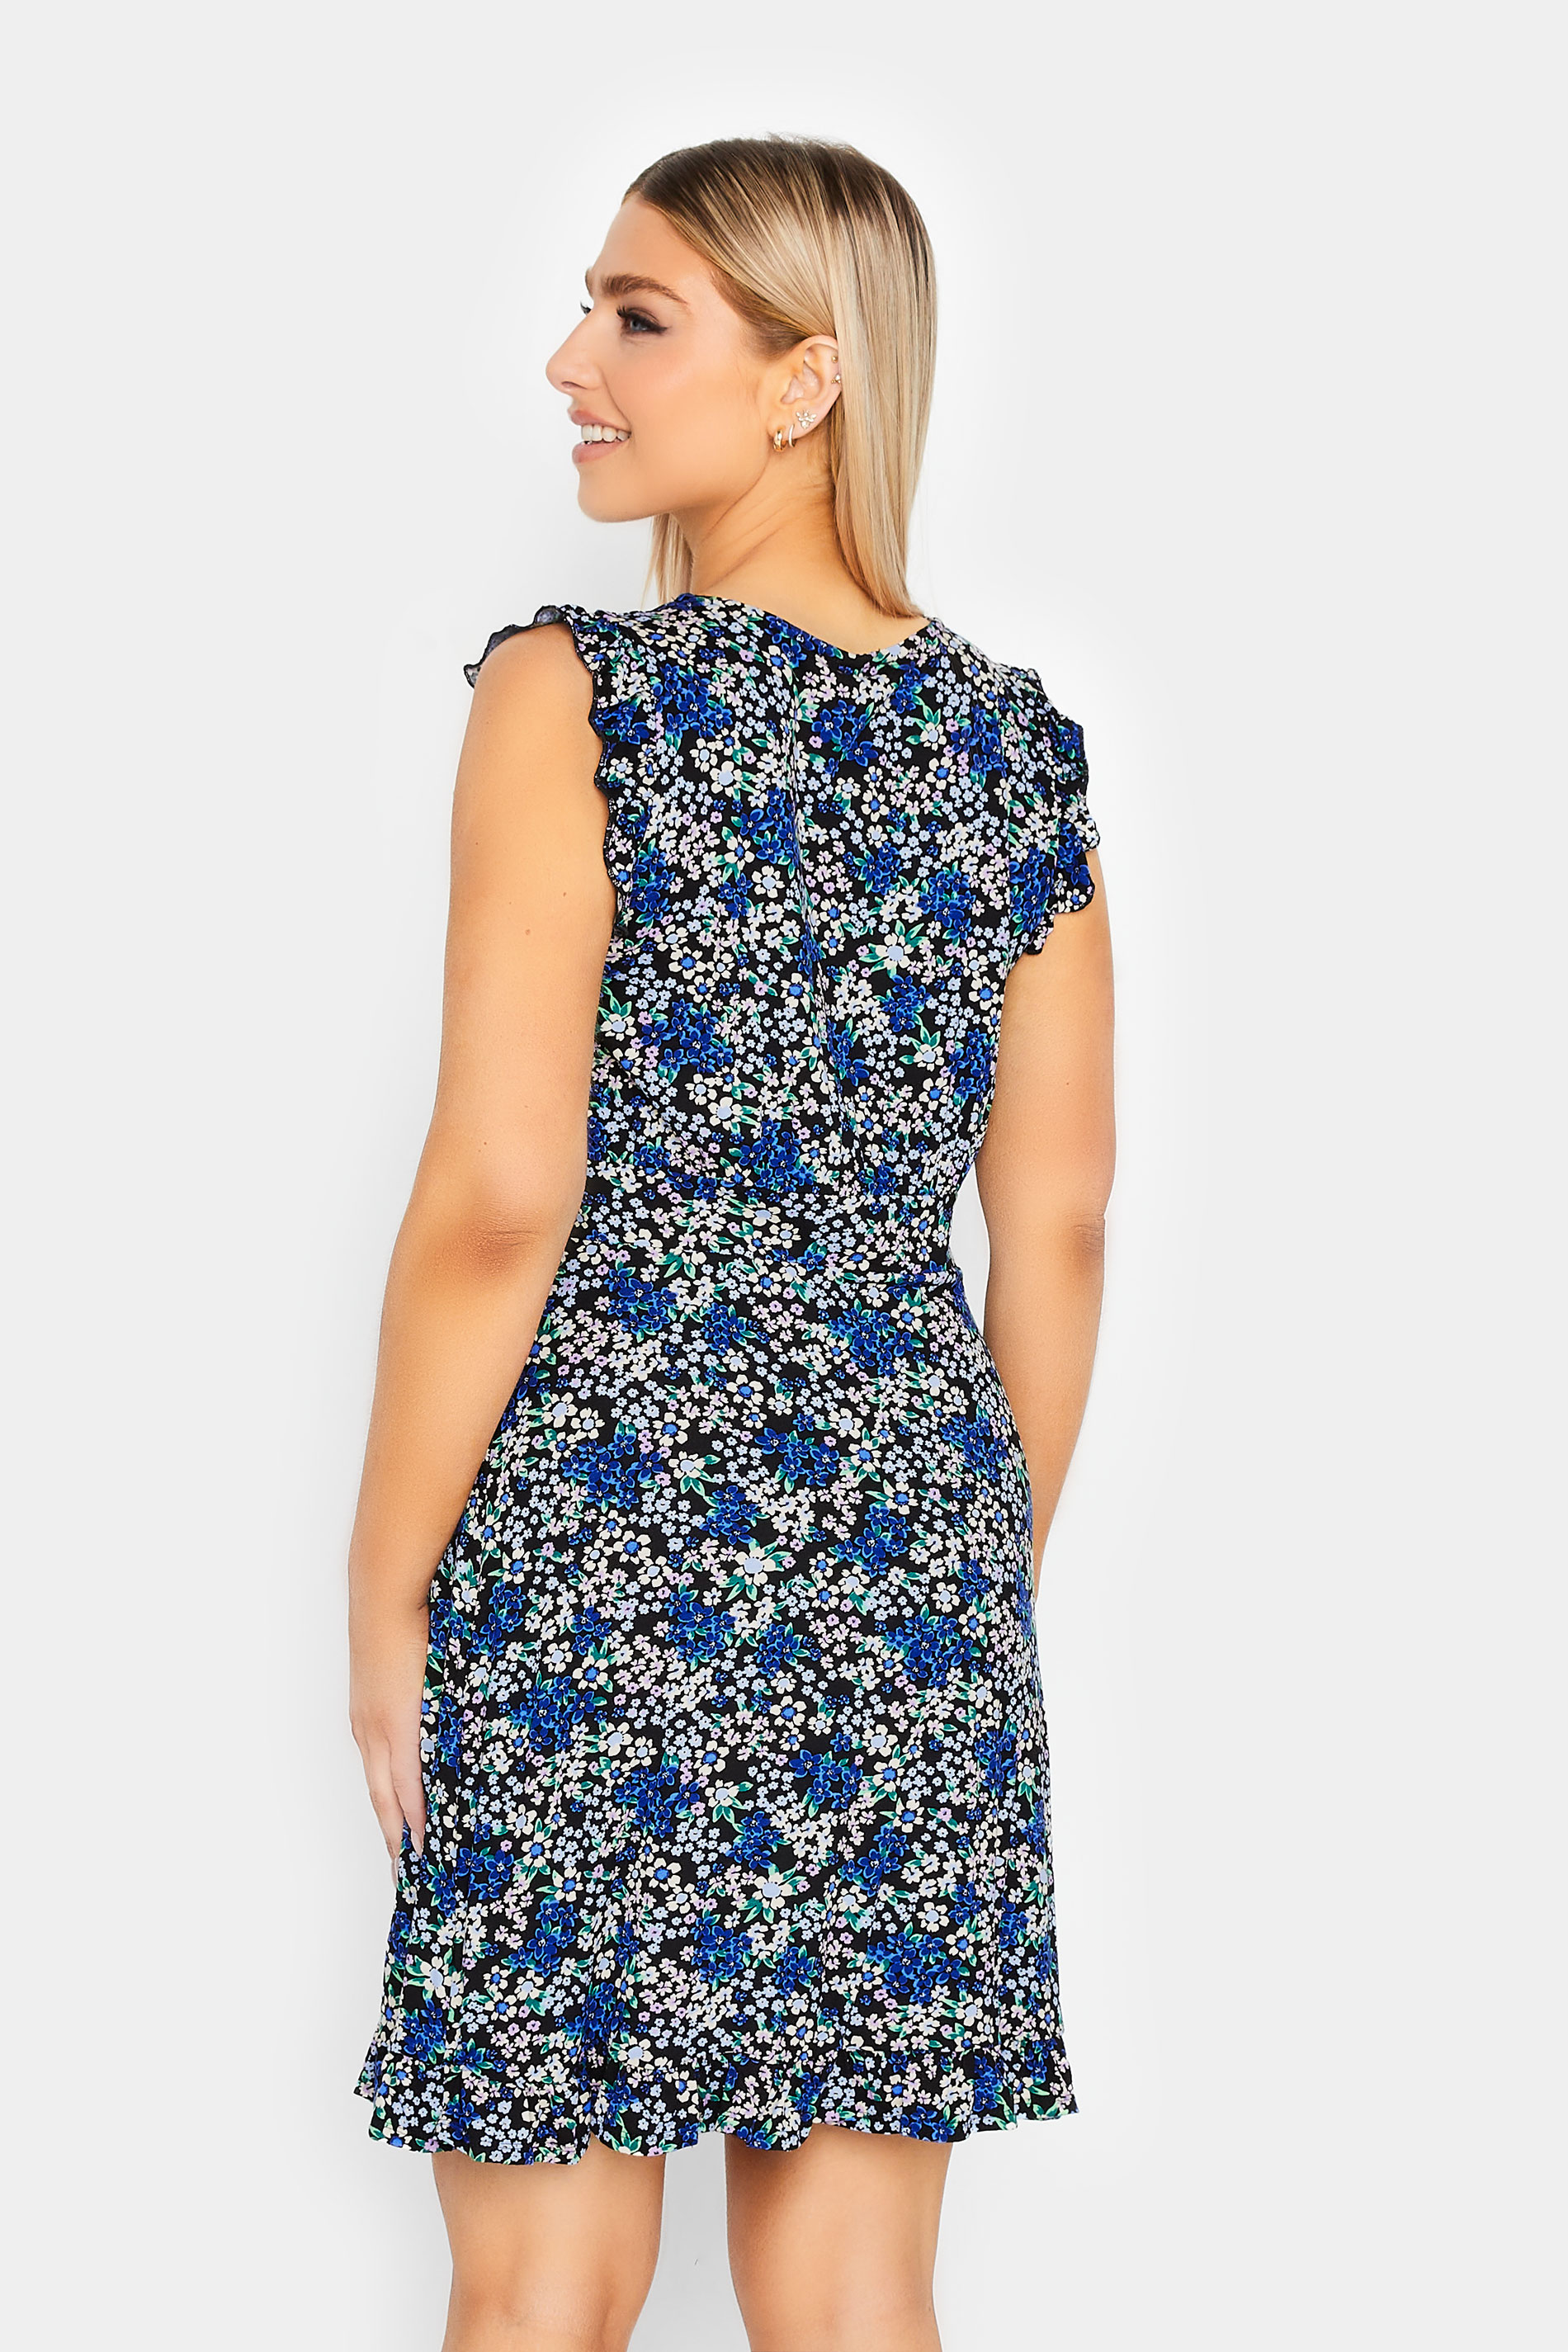 M&Co Blue Floral Print Frill Sleeve Mini Dress | M&Co 3